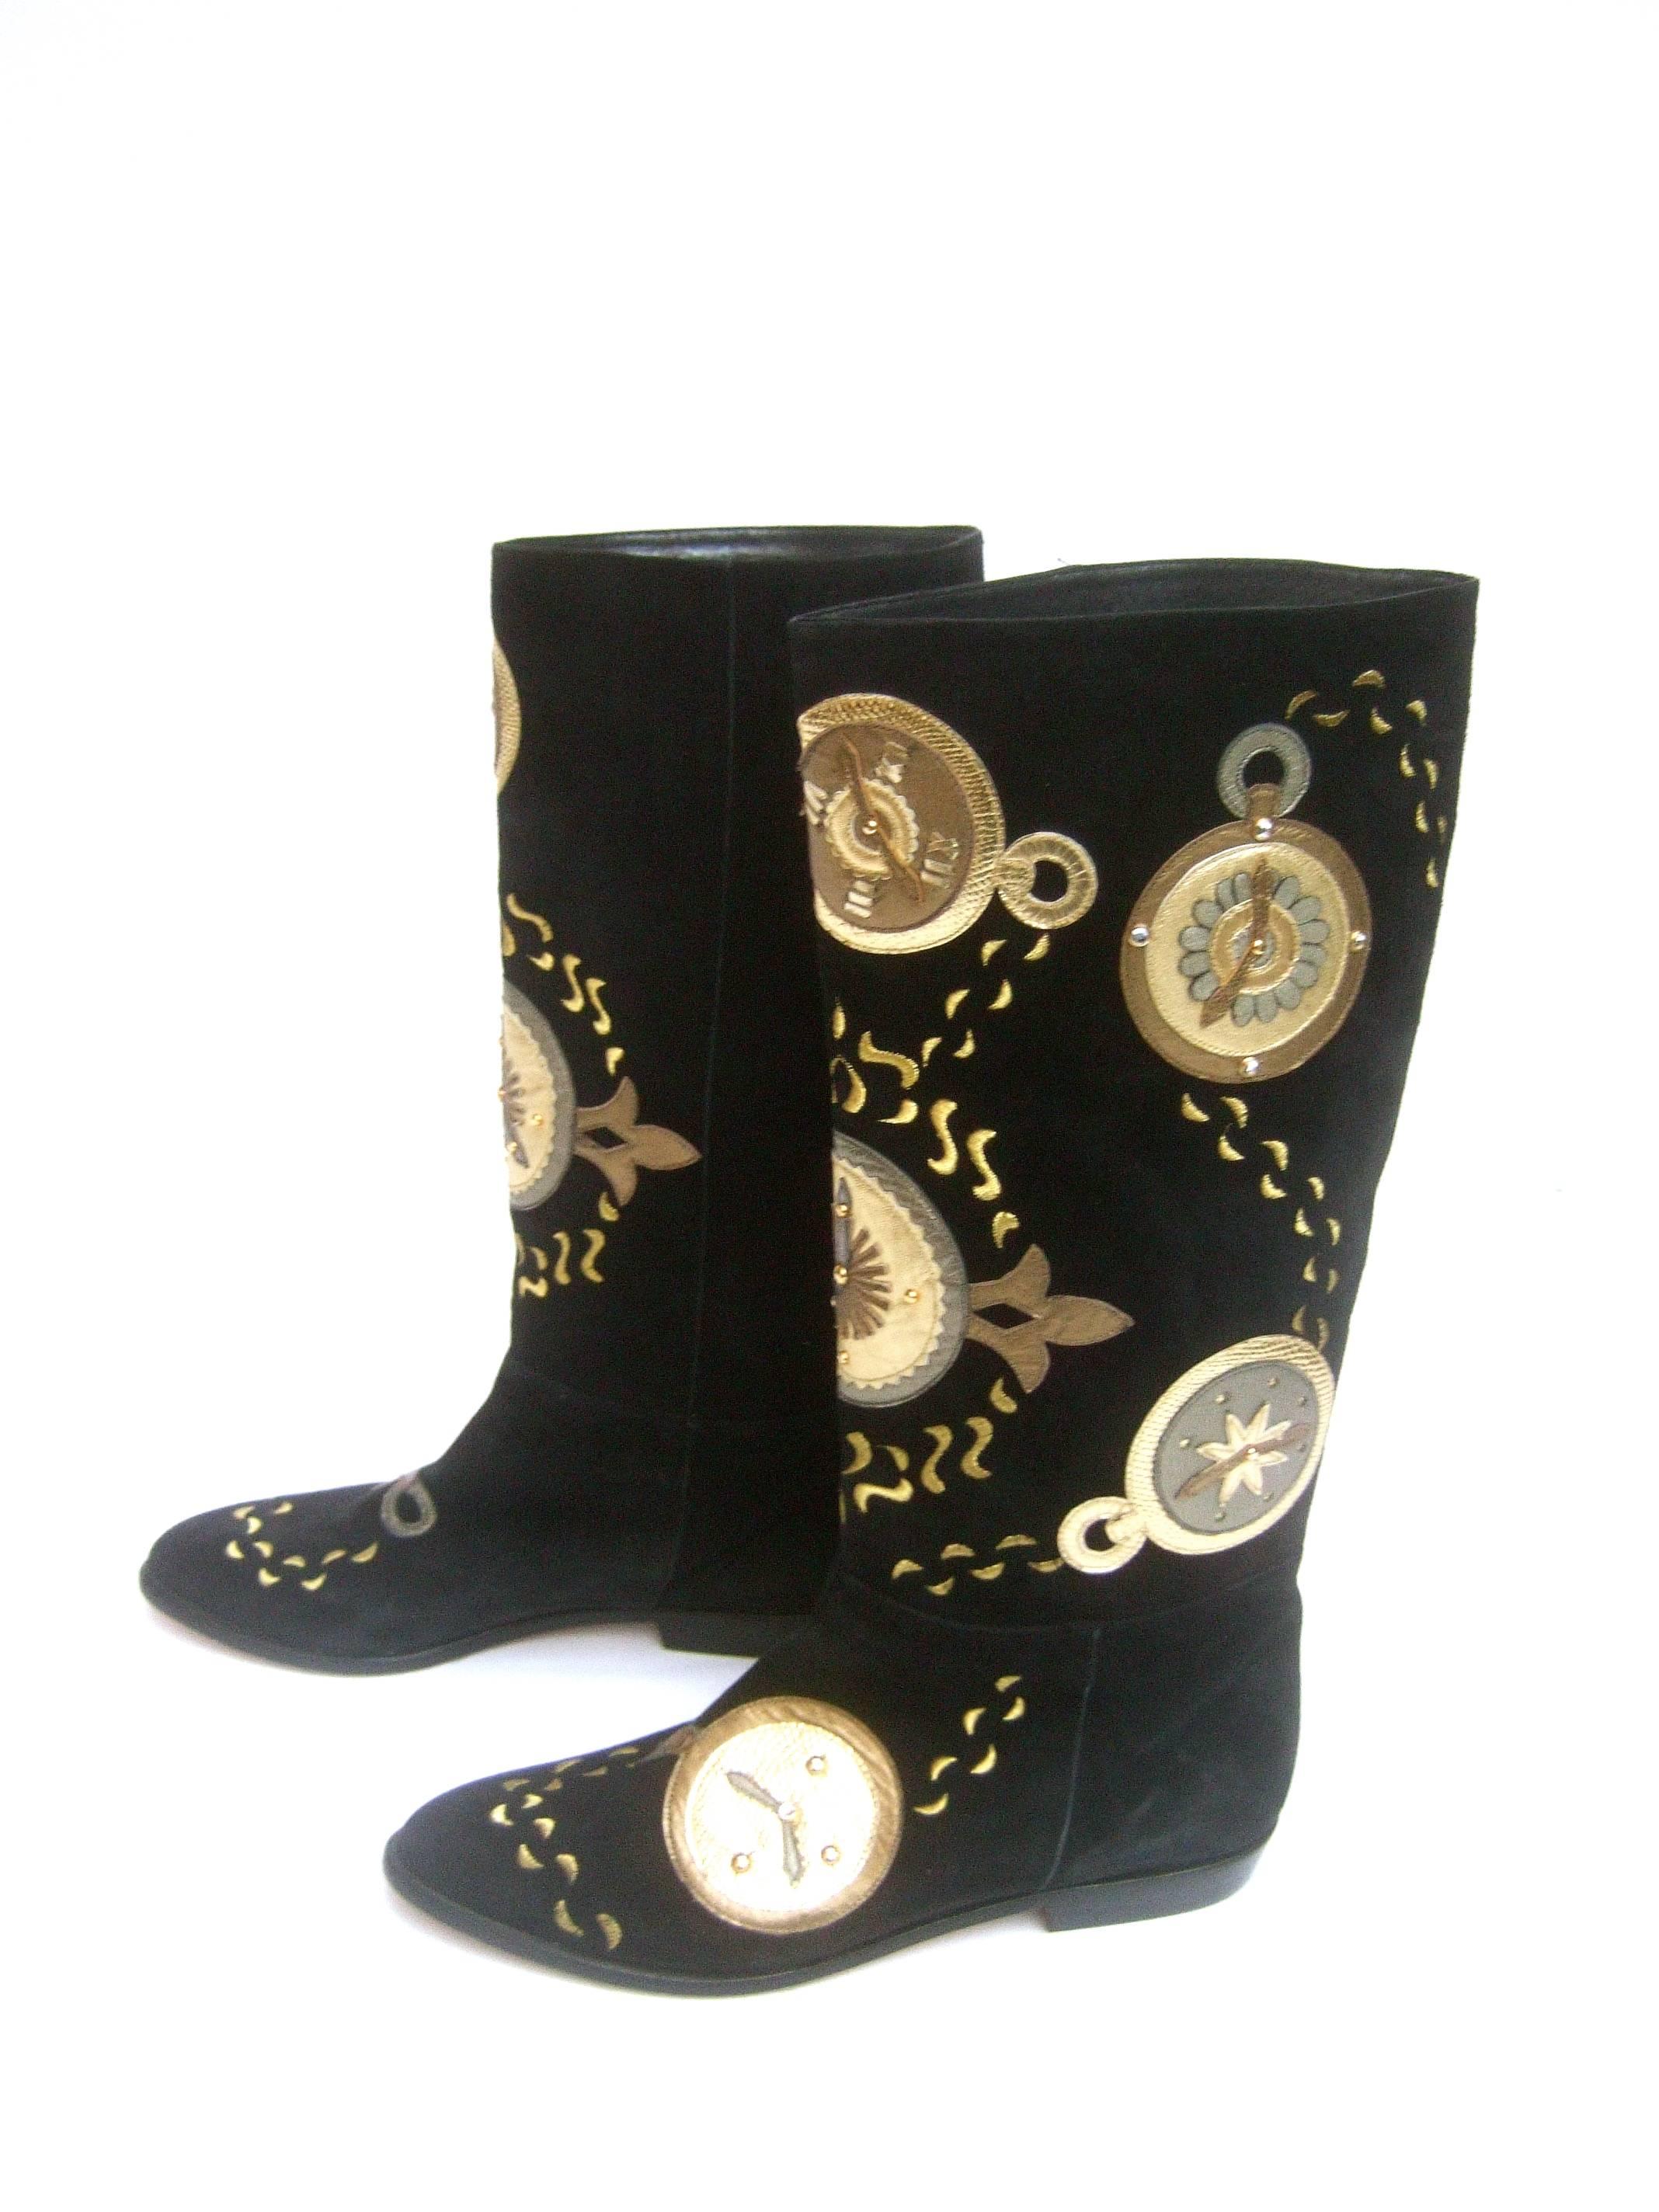 Unique Black Suede Metallic Clock Theme Boots by Zalo  For Sale 1